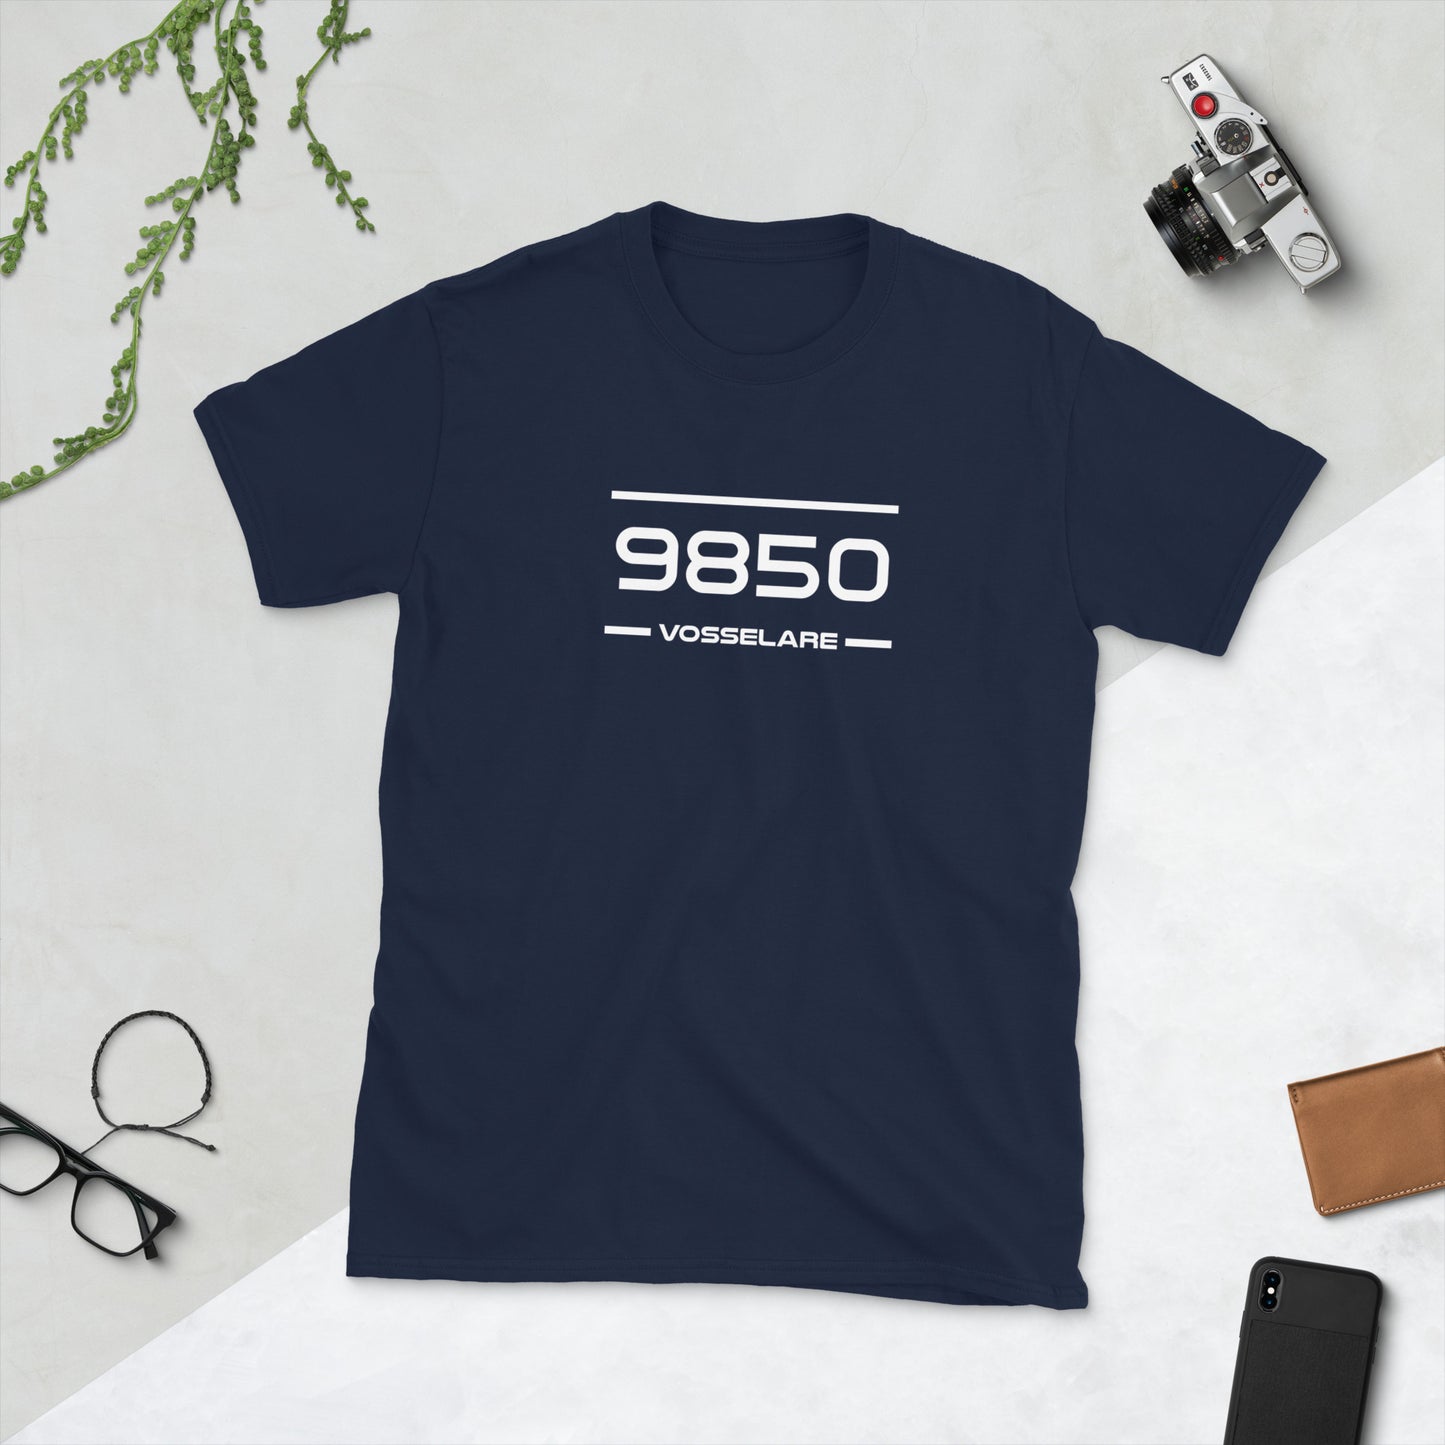 Tshirt - 9850 - Vosselare